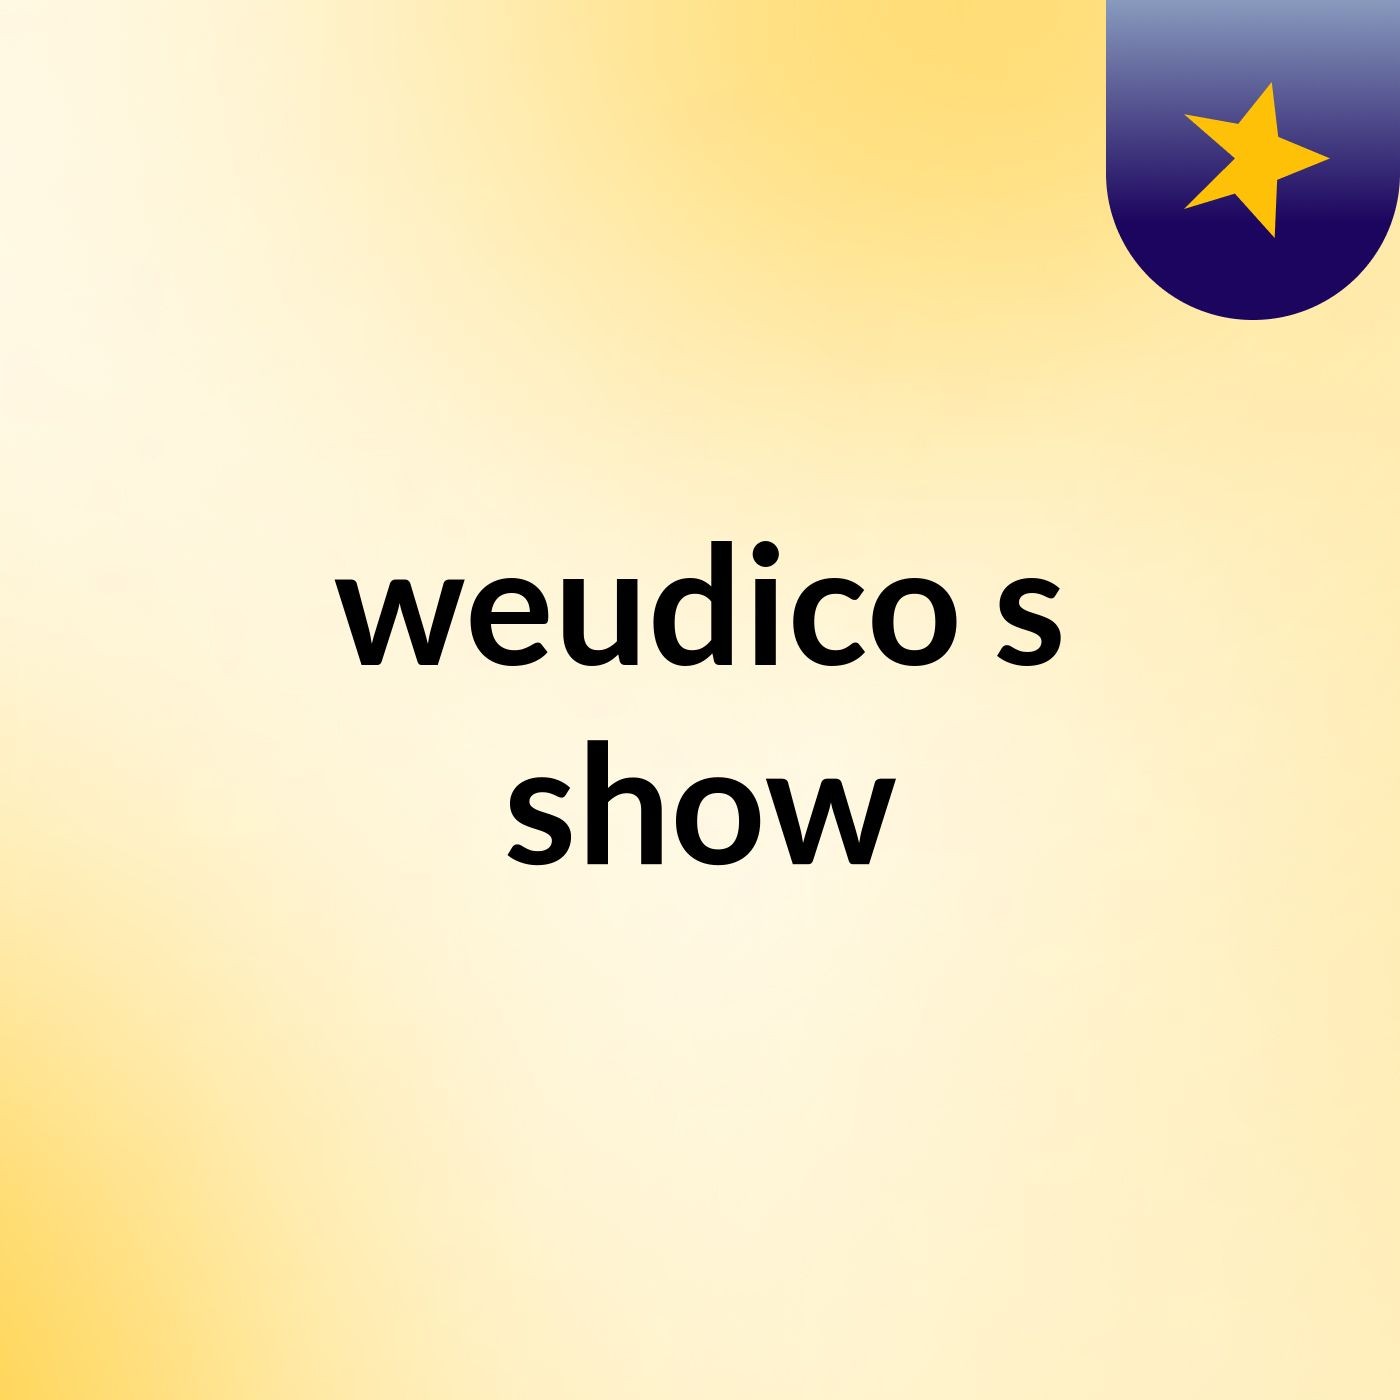 weudico's show